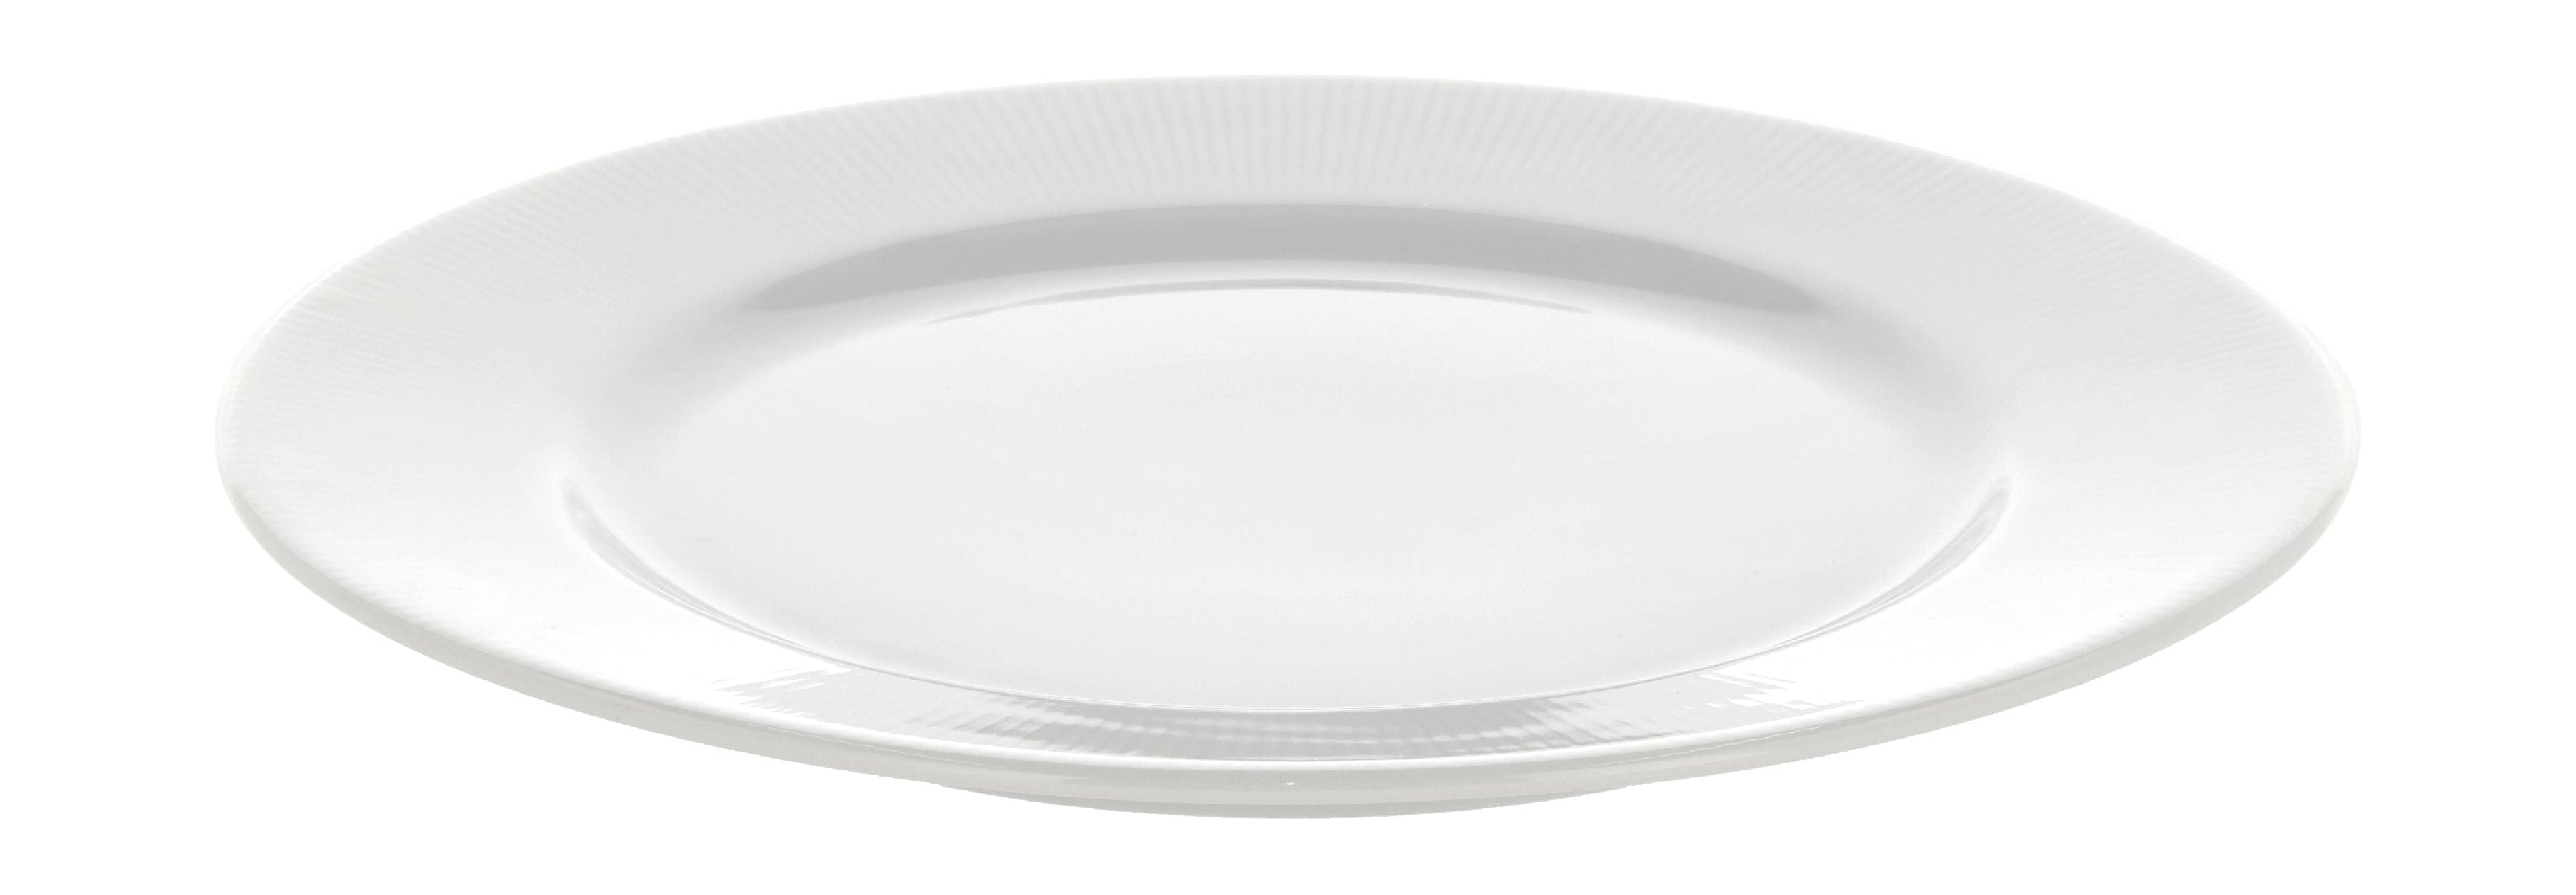 PillivUyt EventA Cail Plate plano con borde Ø22 cm, blanco